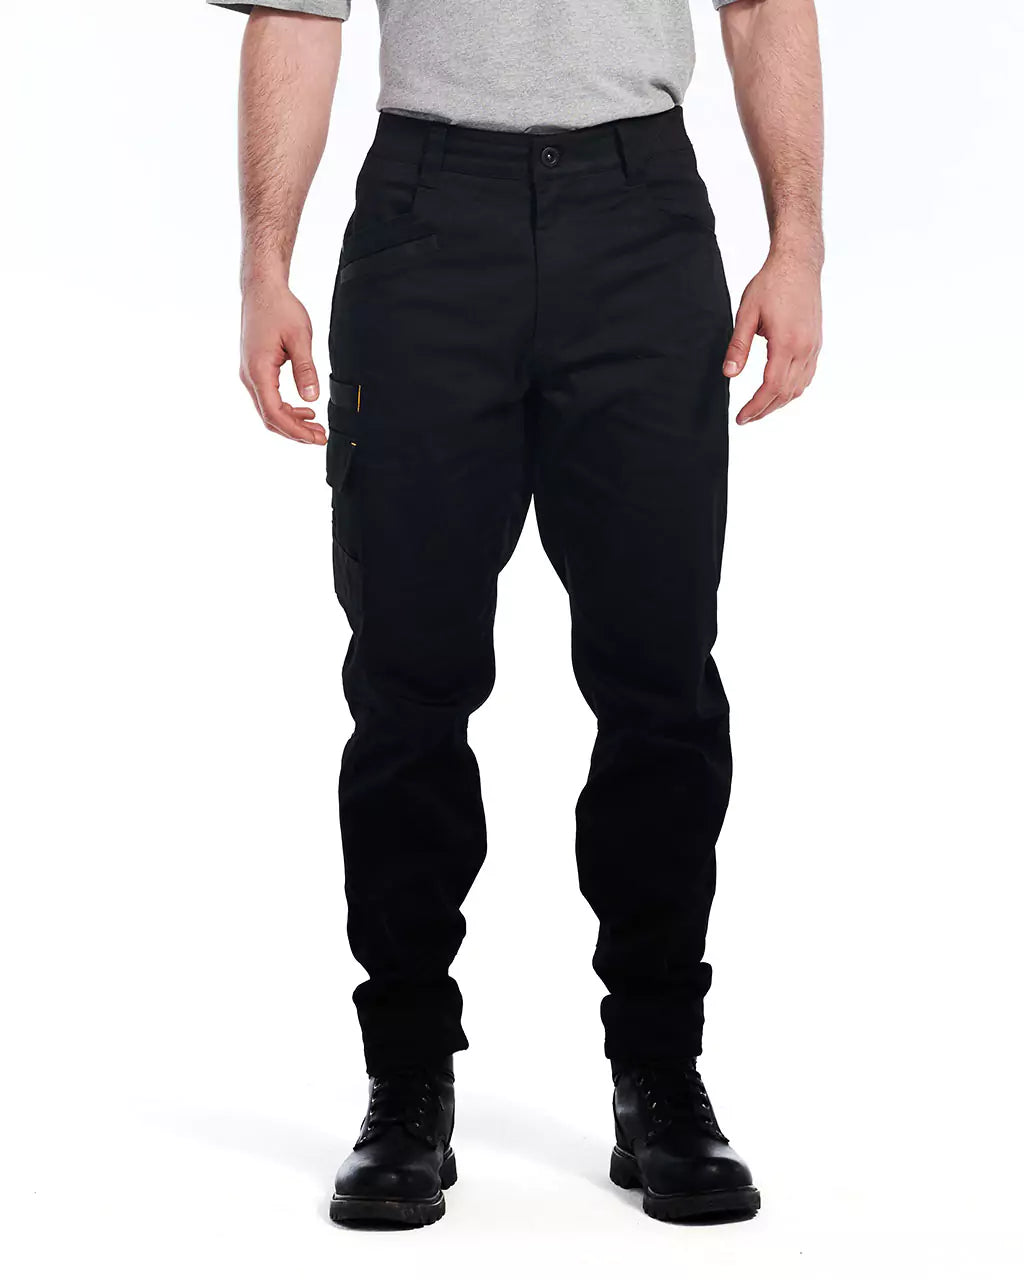 Buy Contour Athletics Mens MechStretch Work Pants for Men Slim Fit Black  3230 at Amazonin